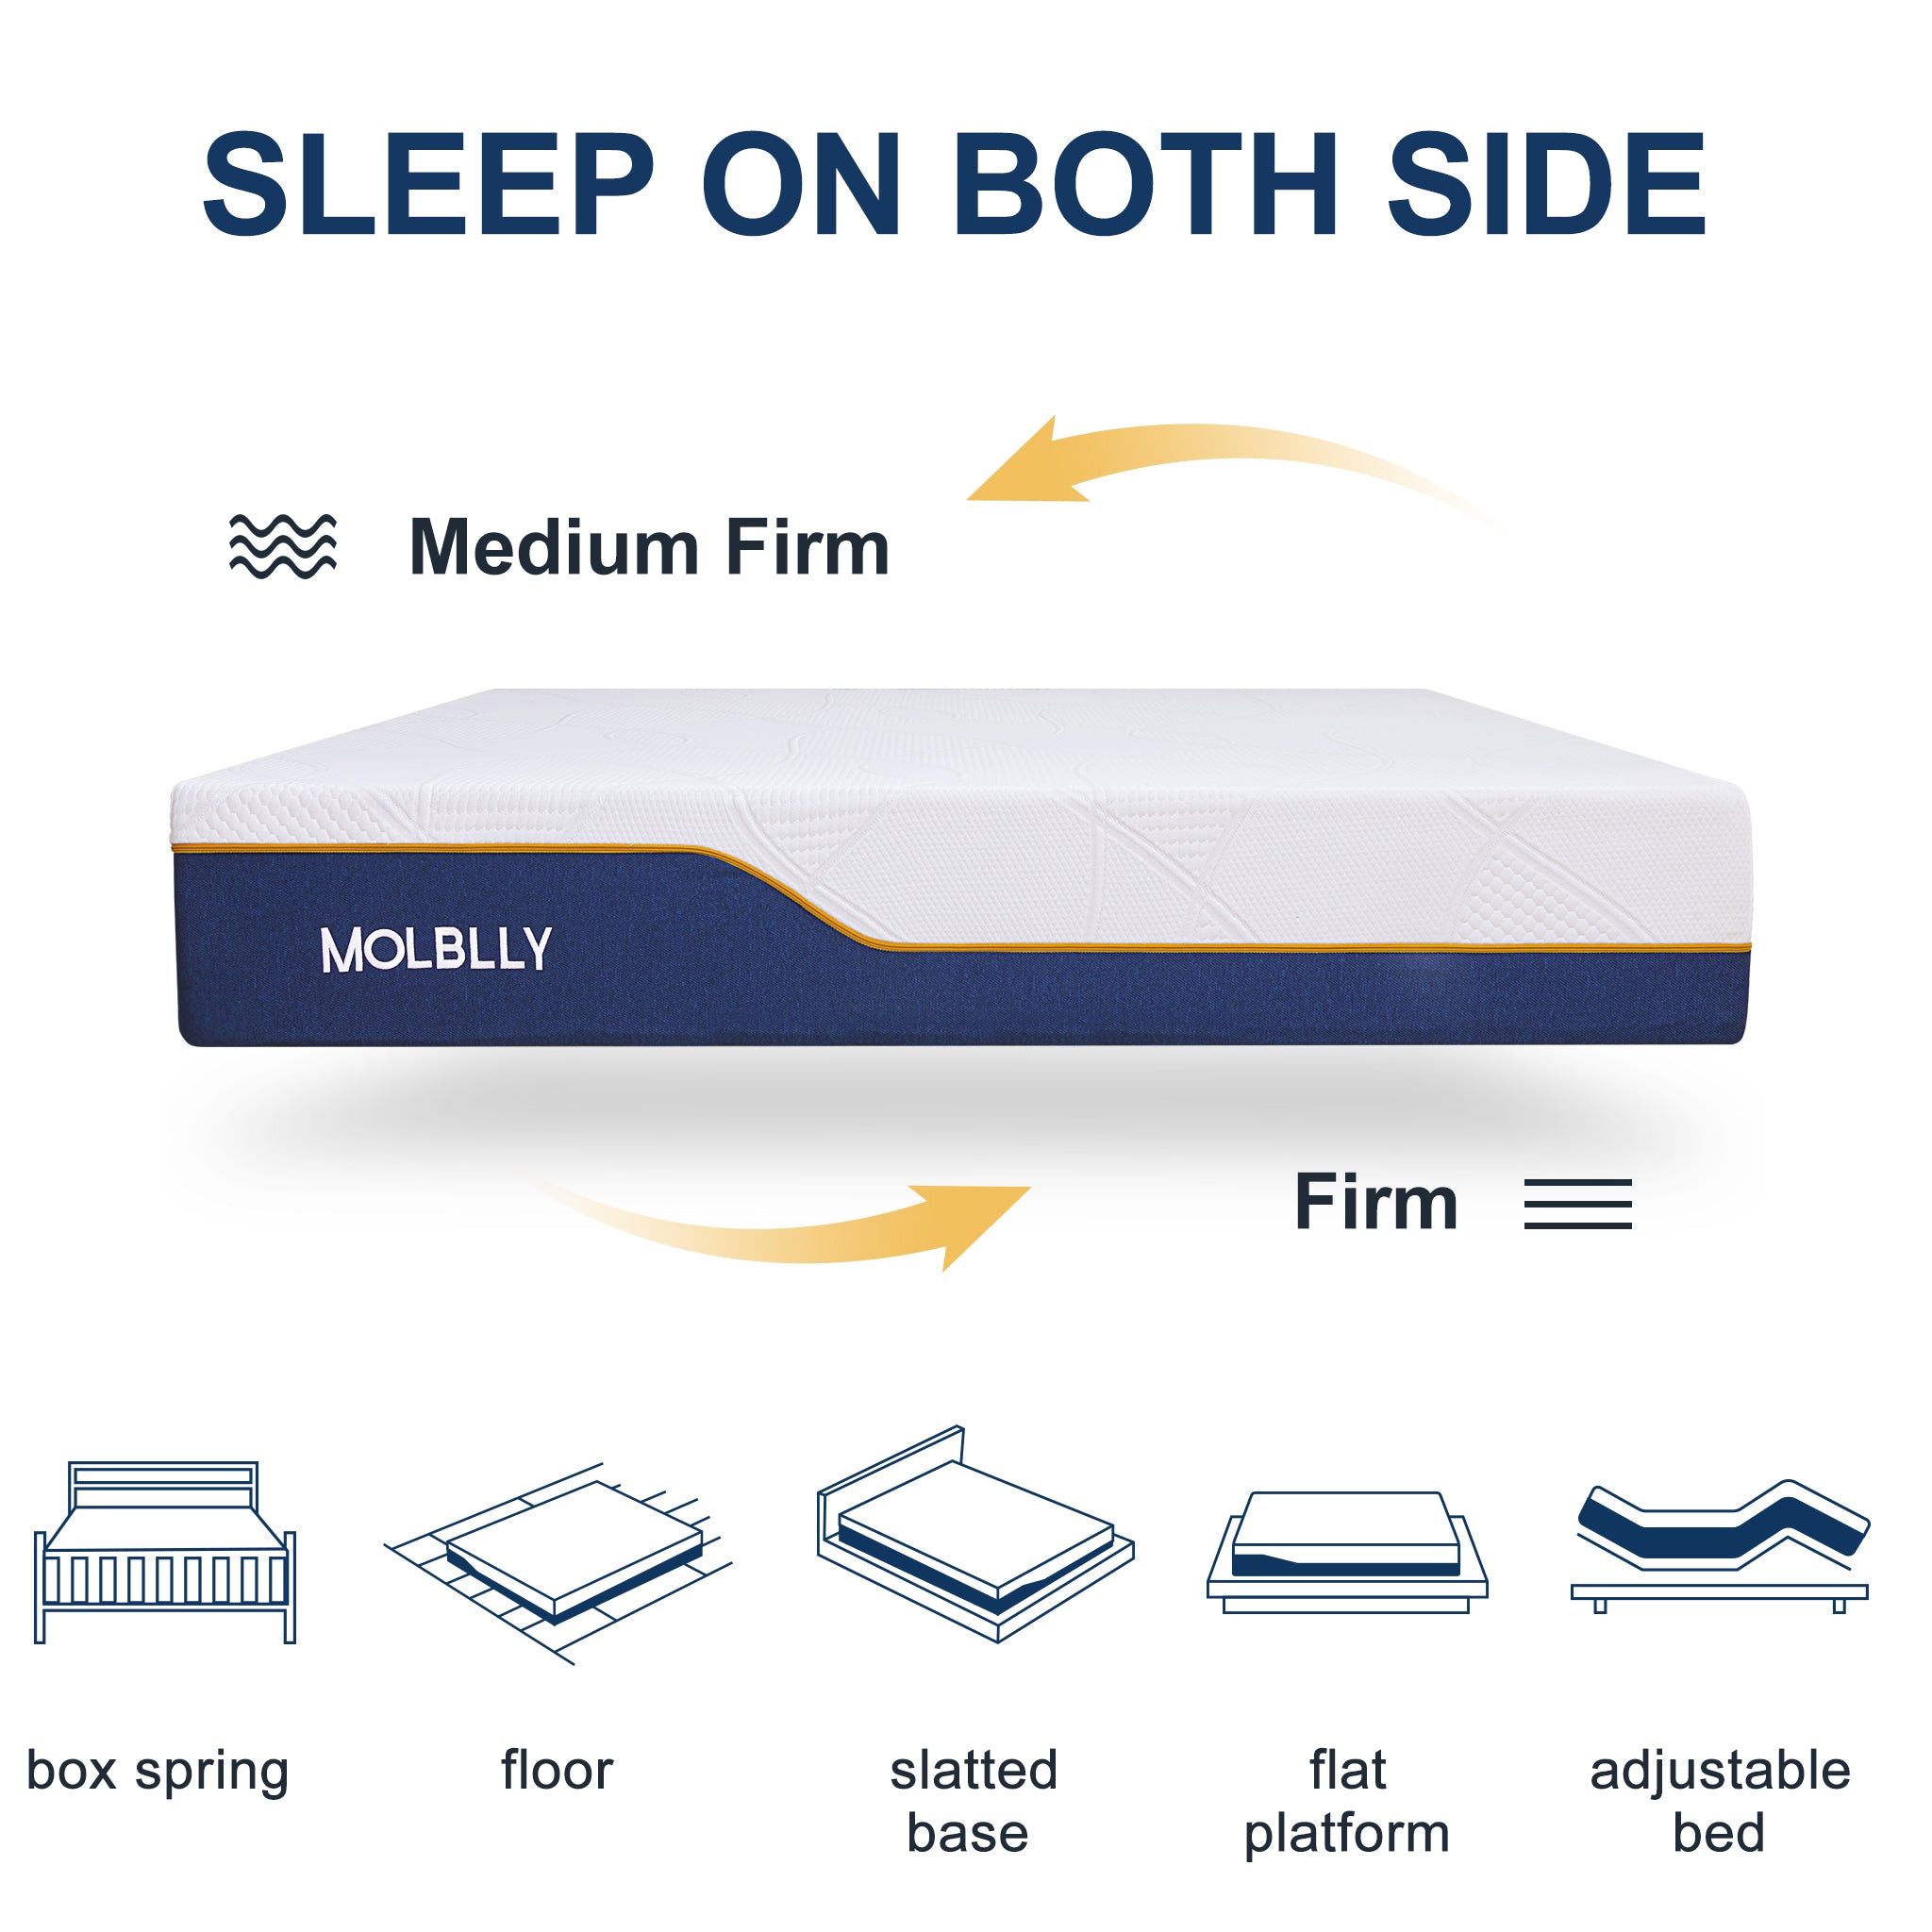 Molblly memory foam mattress is medium firm